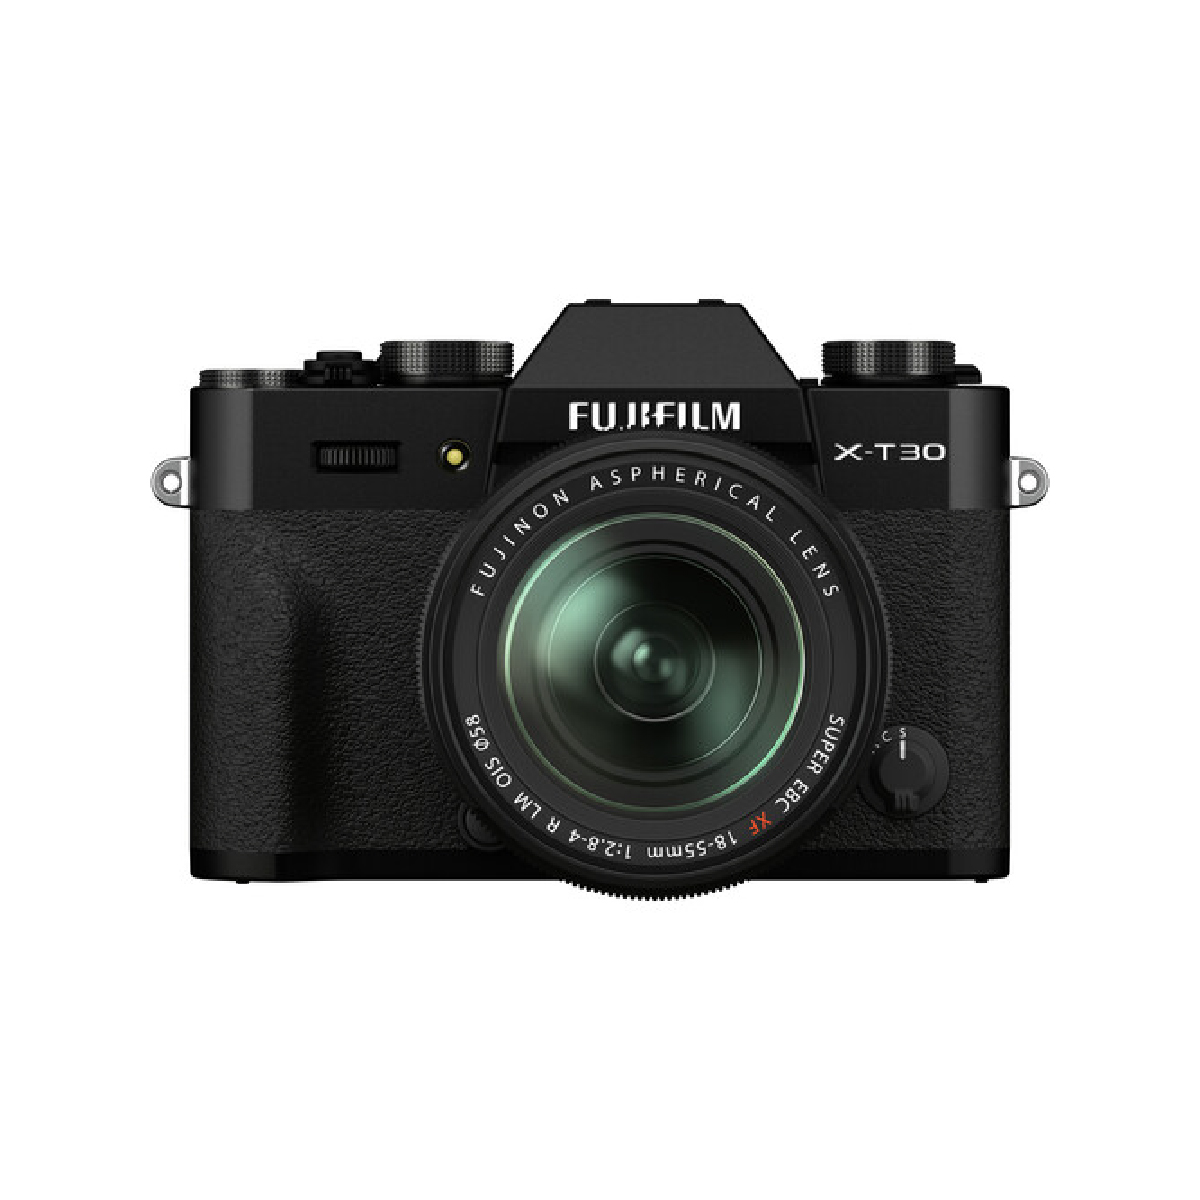 Fujifilm X-T30 II Camera Body With XF18-55mm Lens – Black (1)